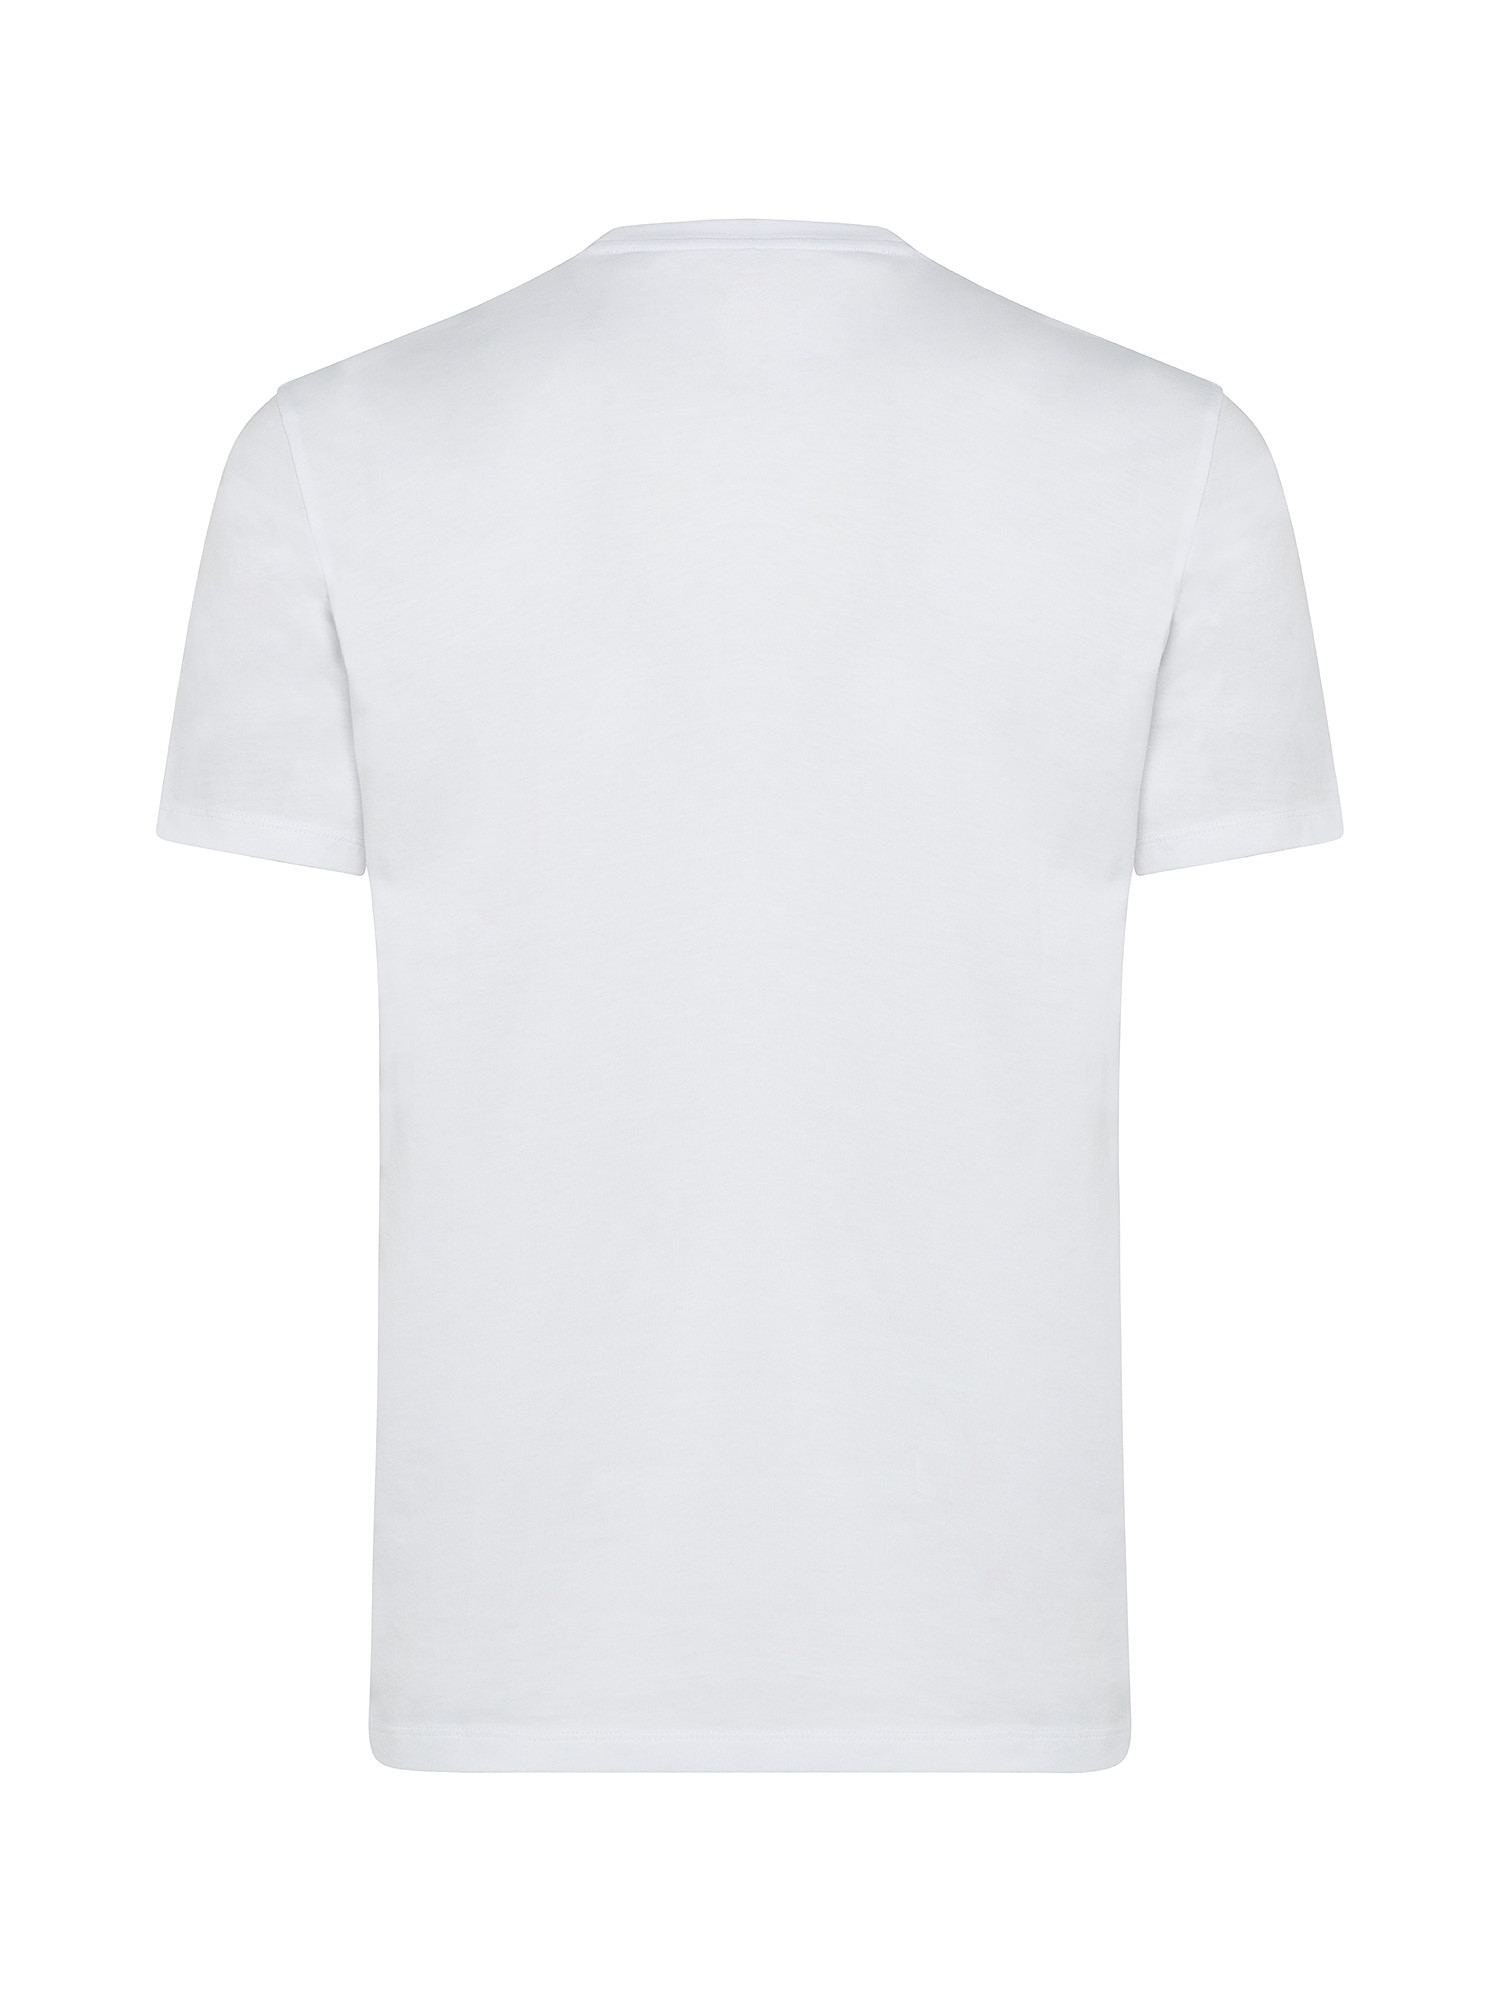 Armani Exchange - Regular fit cotton T-shirt with logo, White, large image number 1